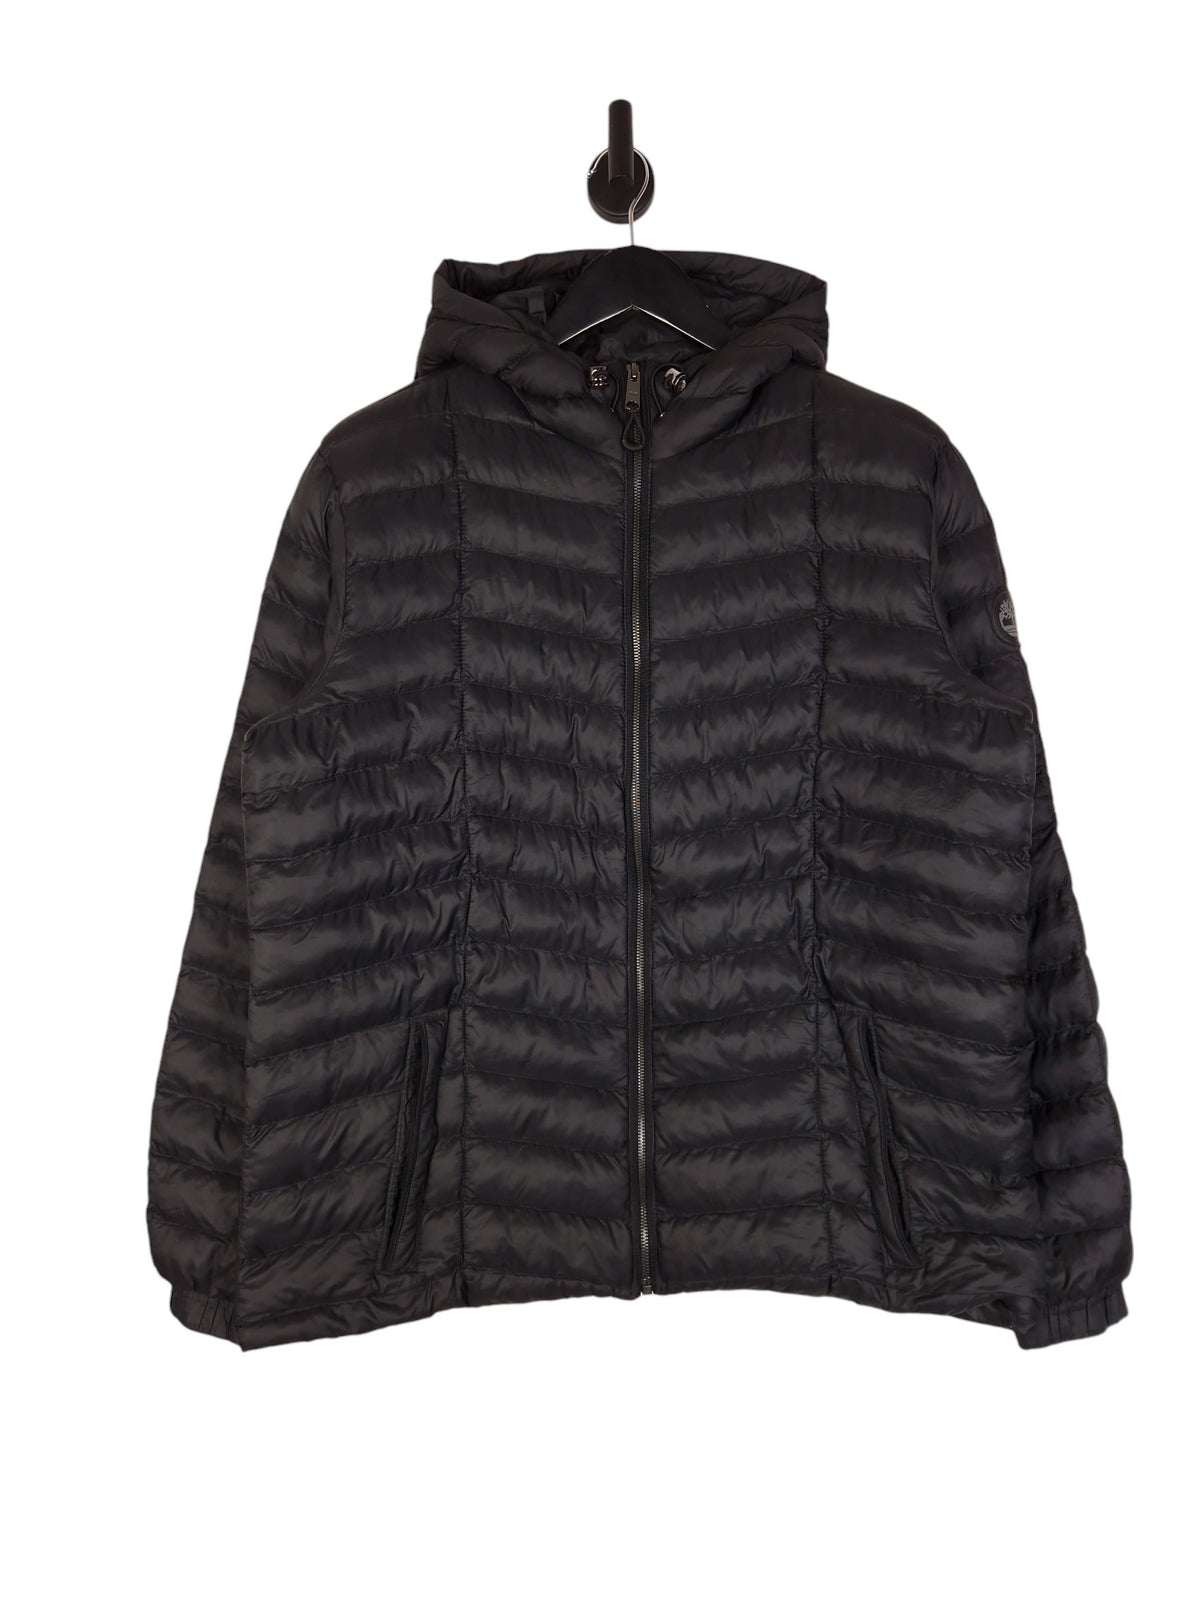 Timberland Hooded Puffer Jacket - Size XL